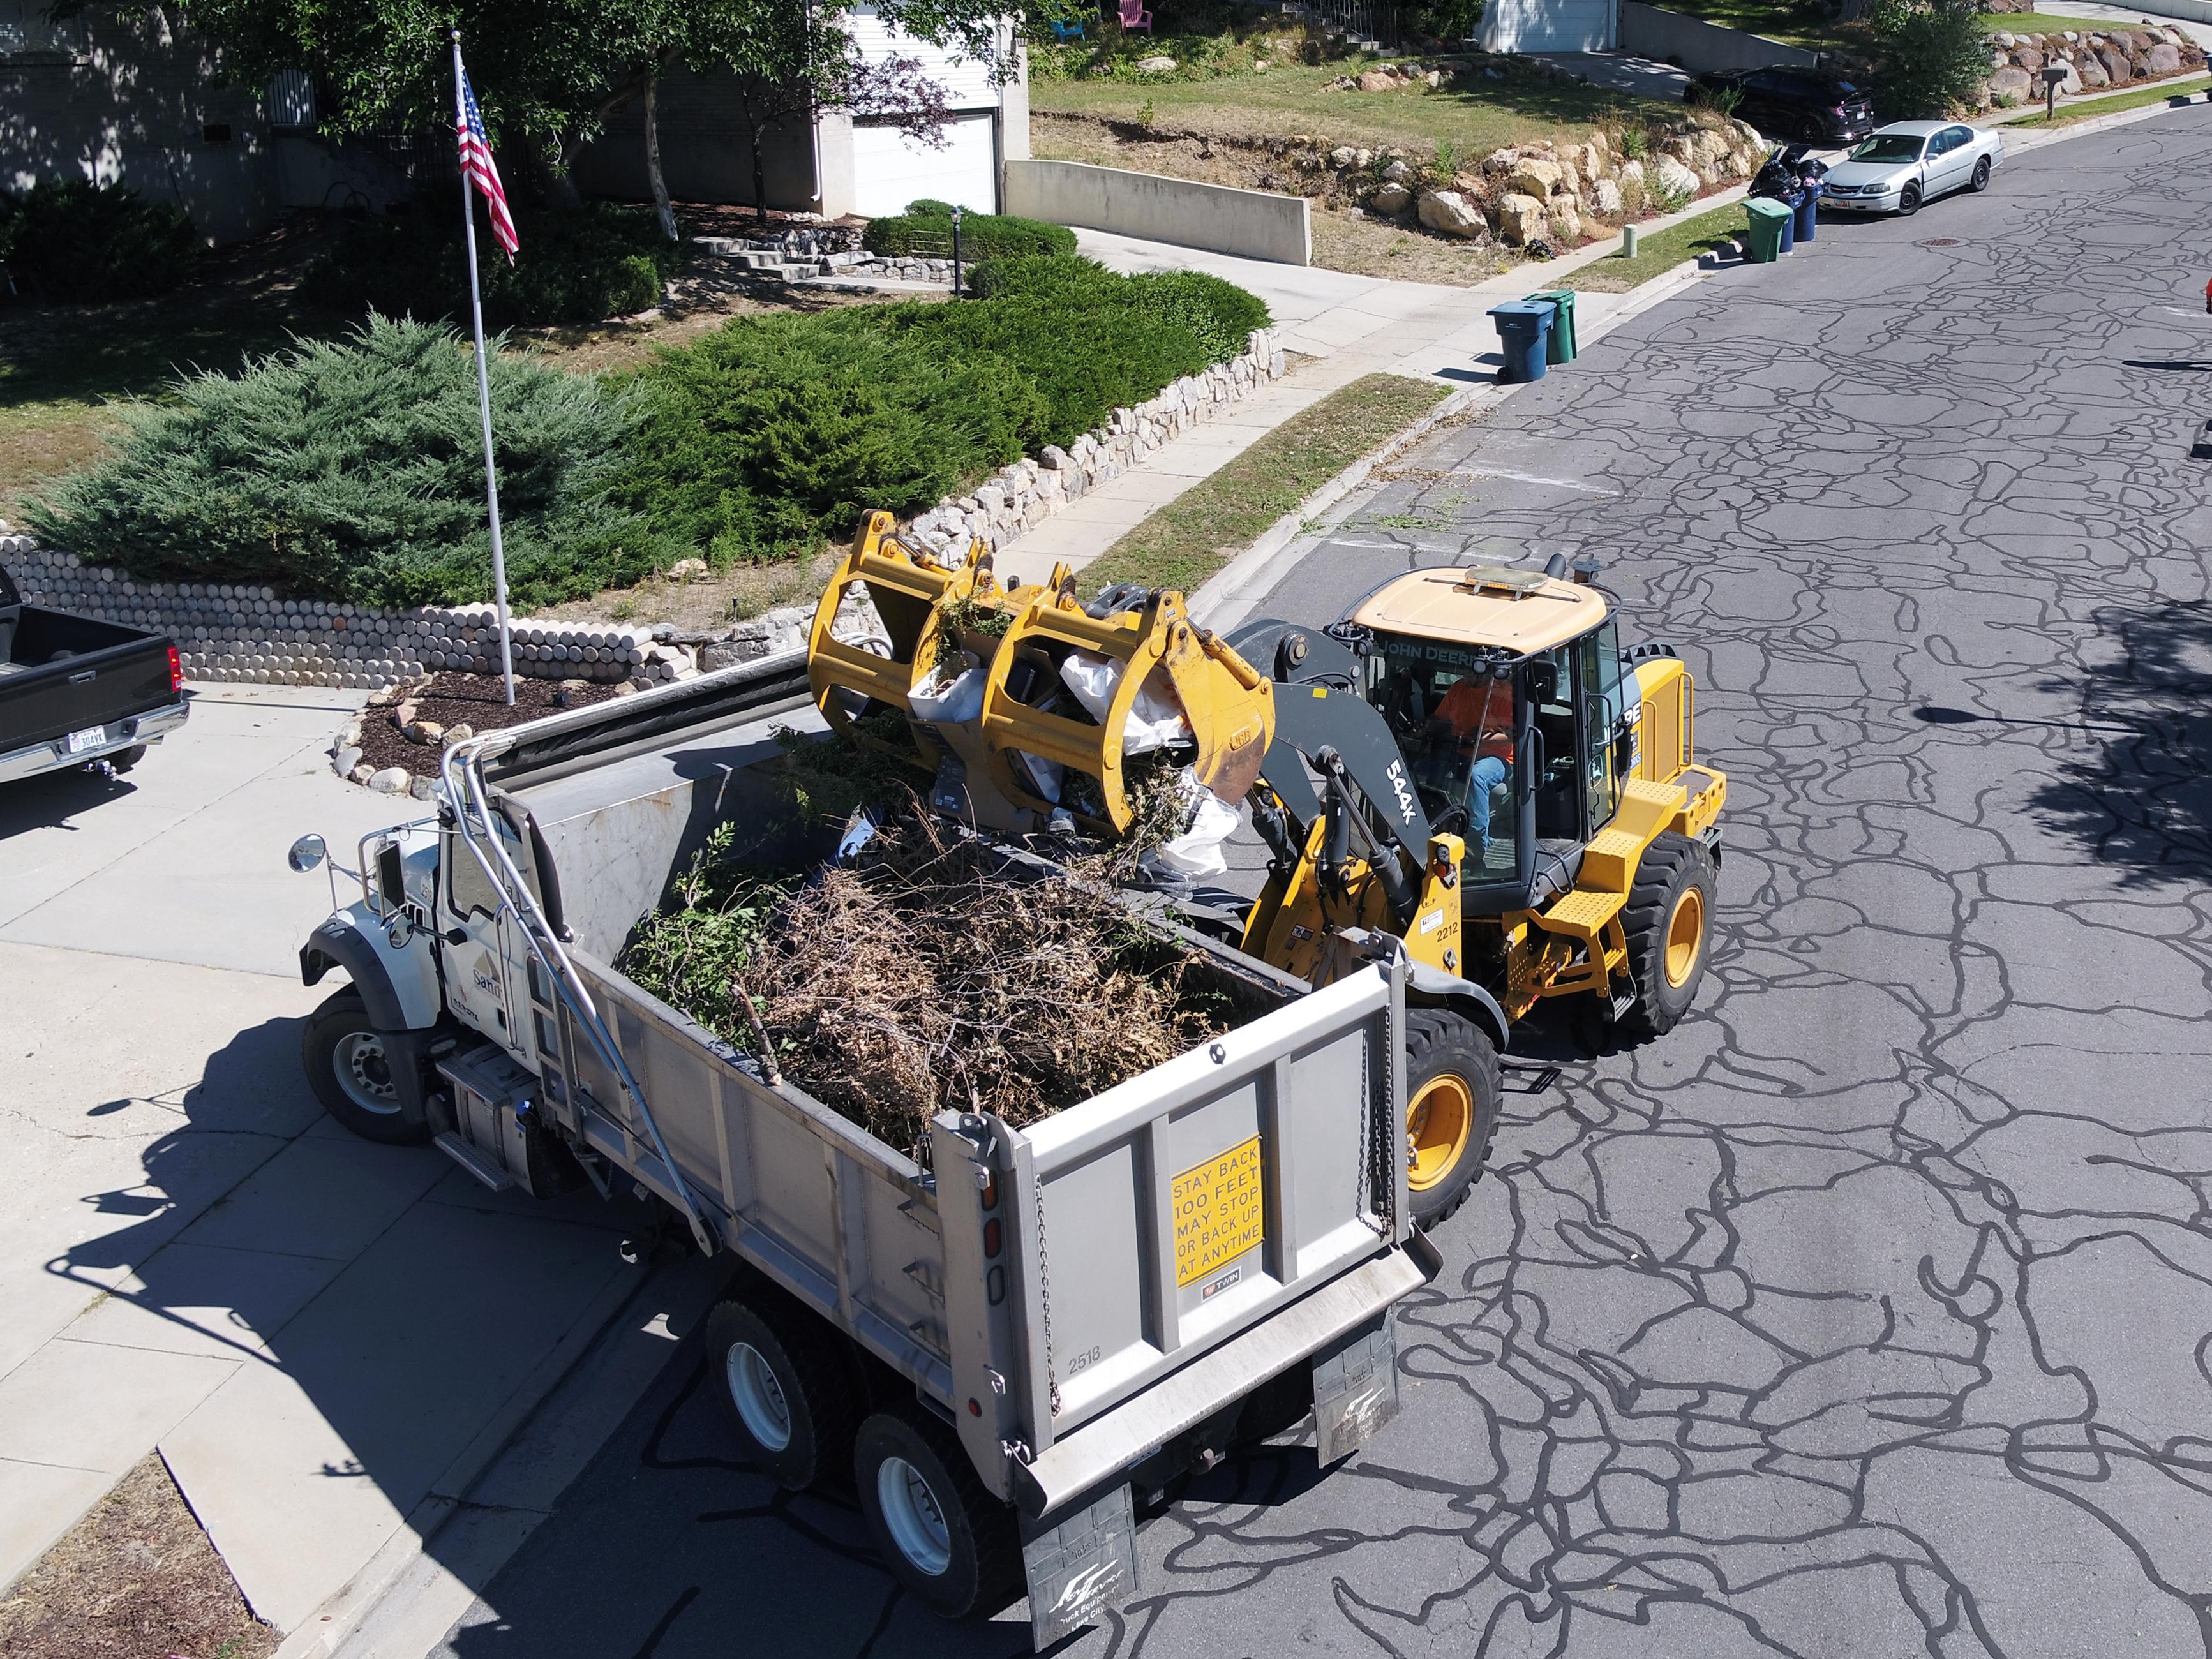 Looks like Sandy’s curbside bulk waste pickup program will be going